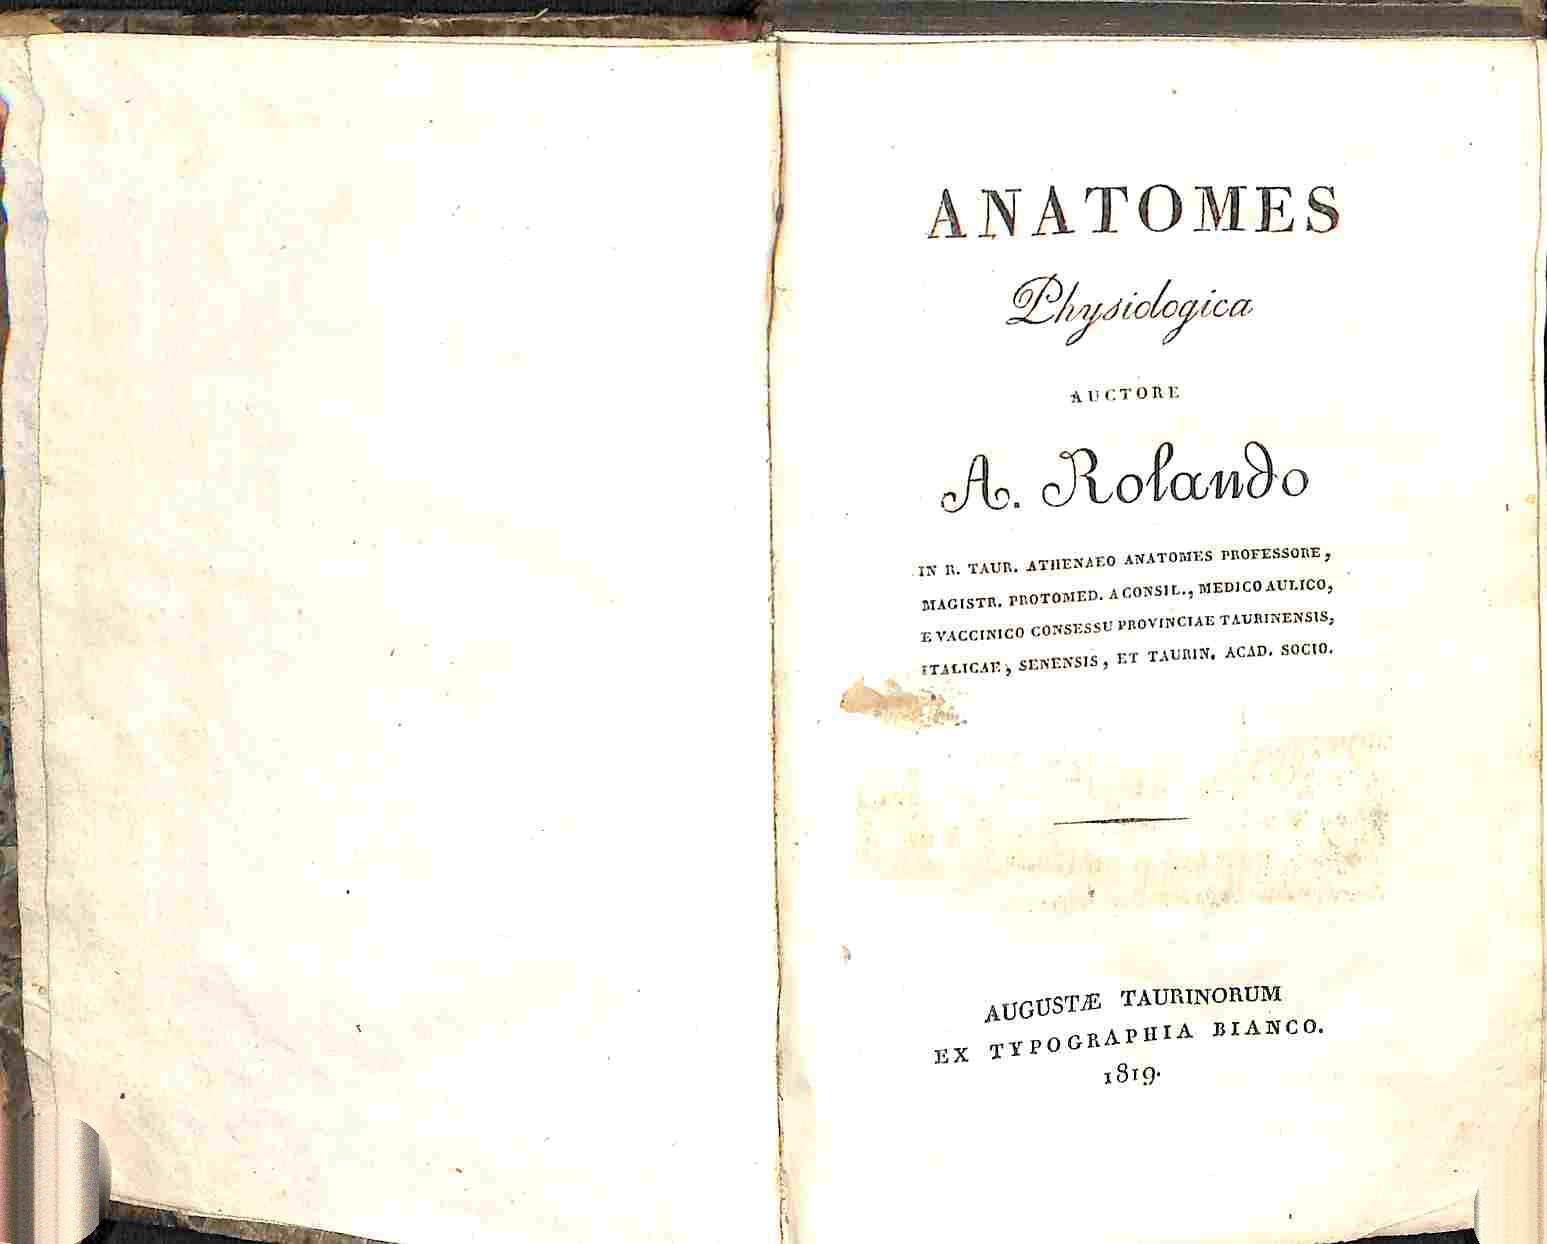 Anatomes physiologica